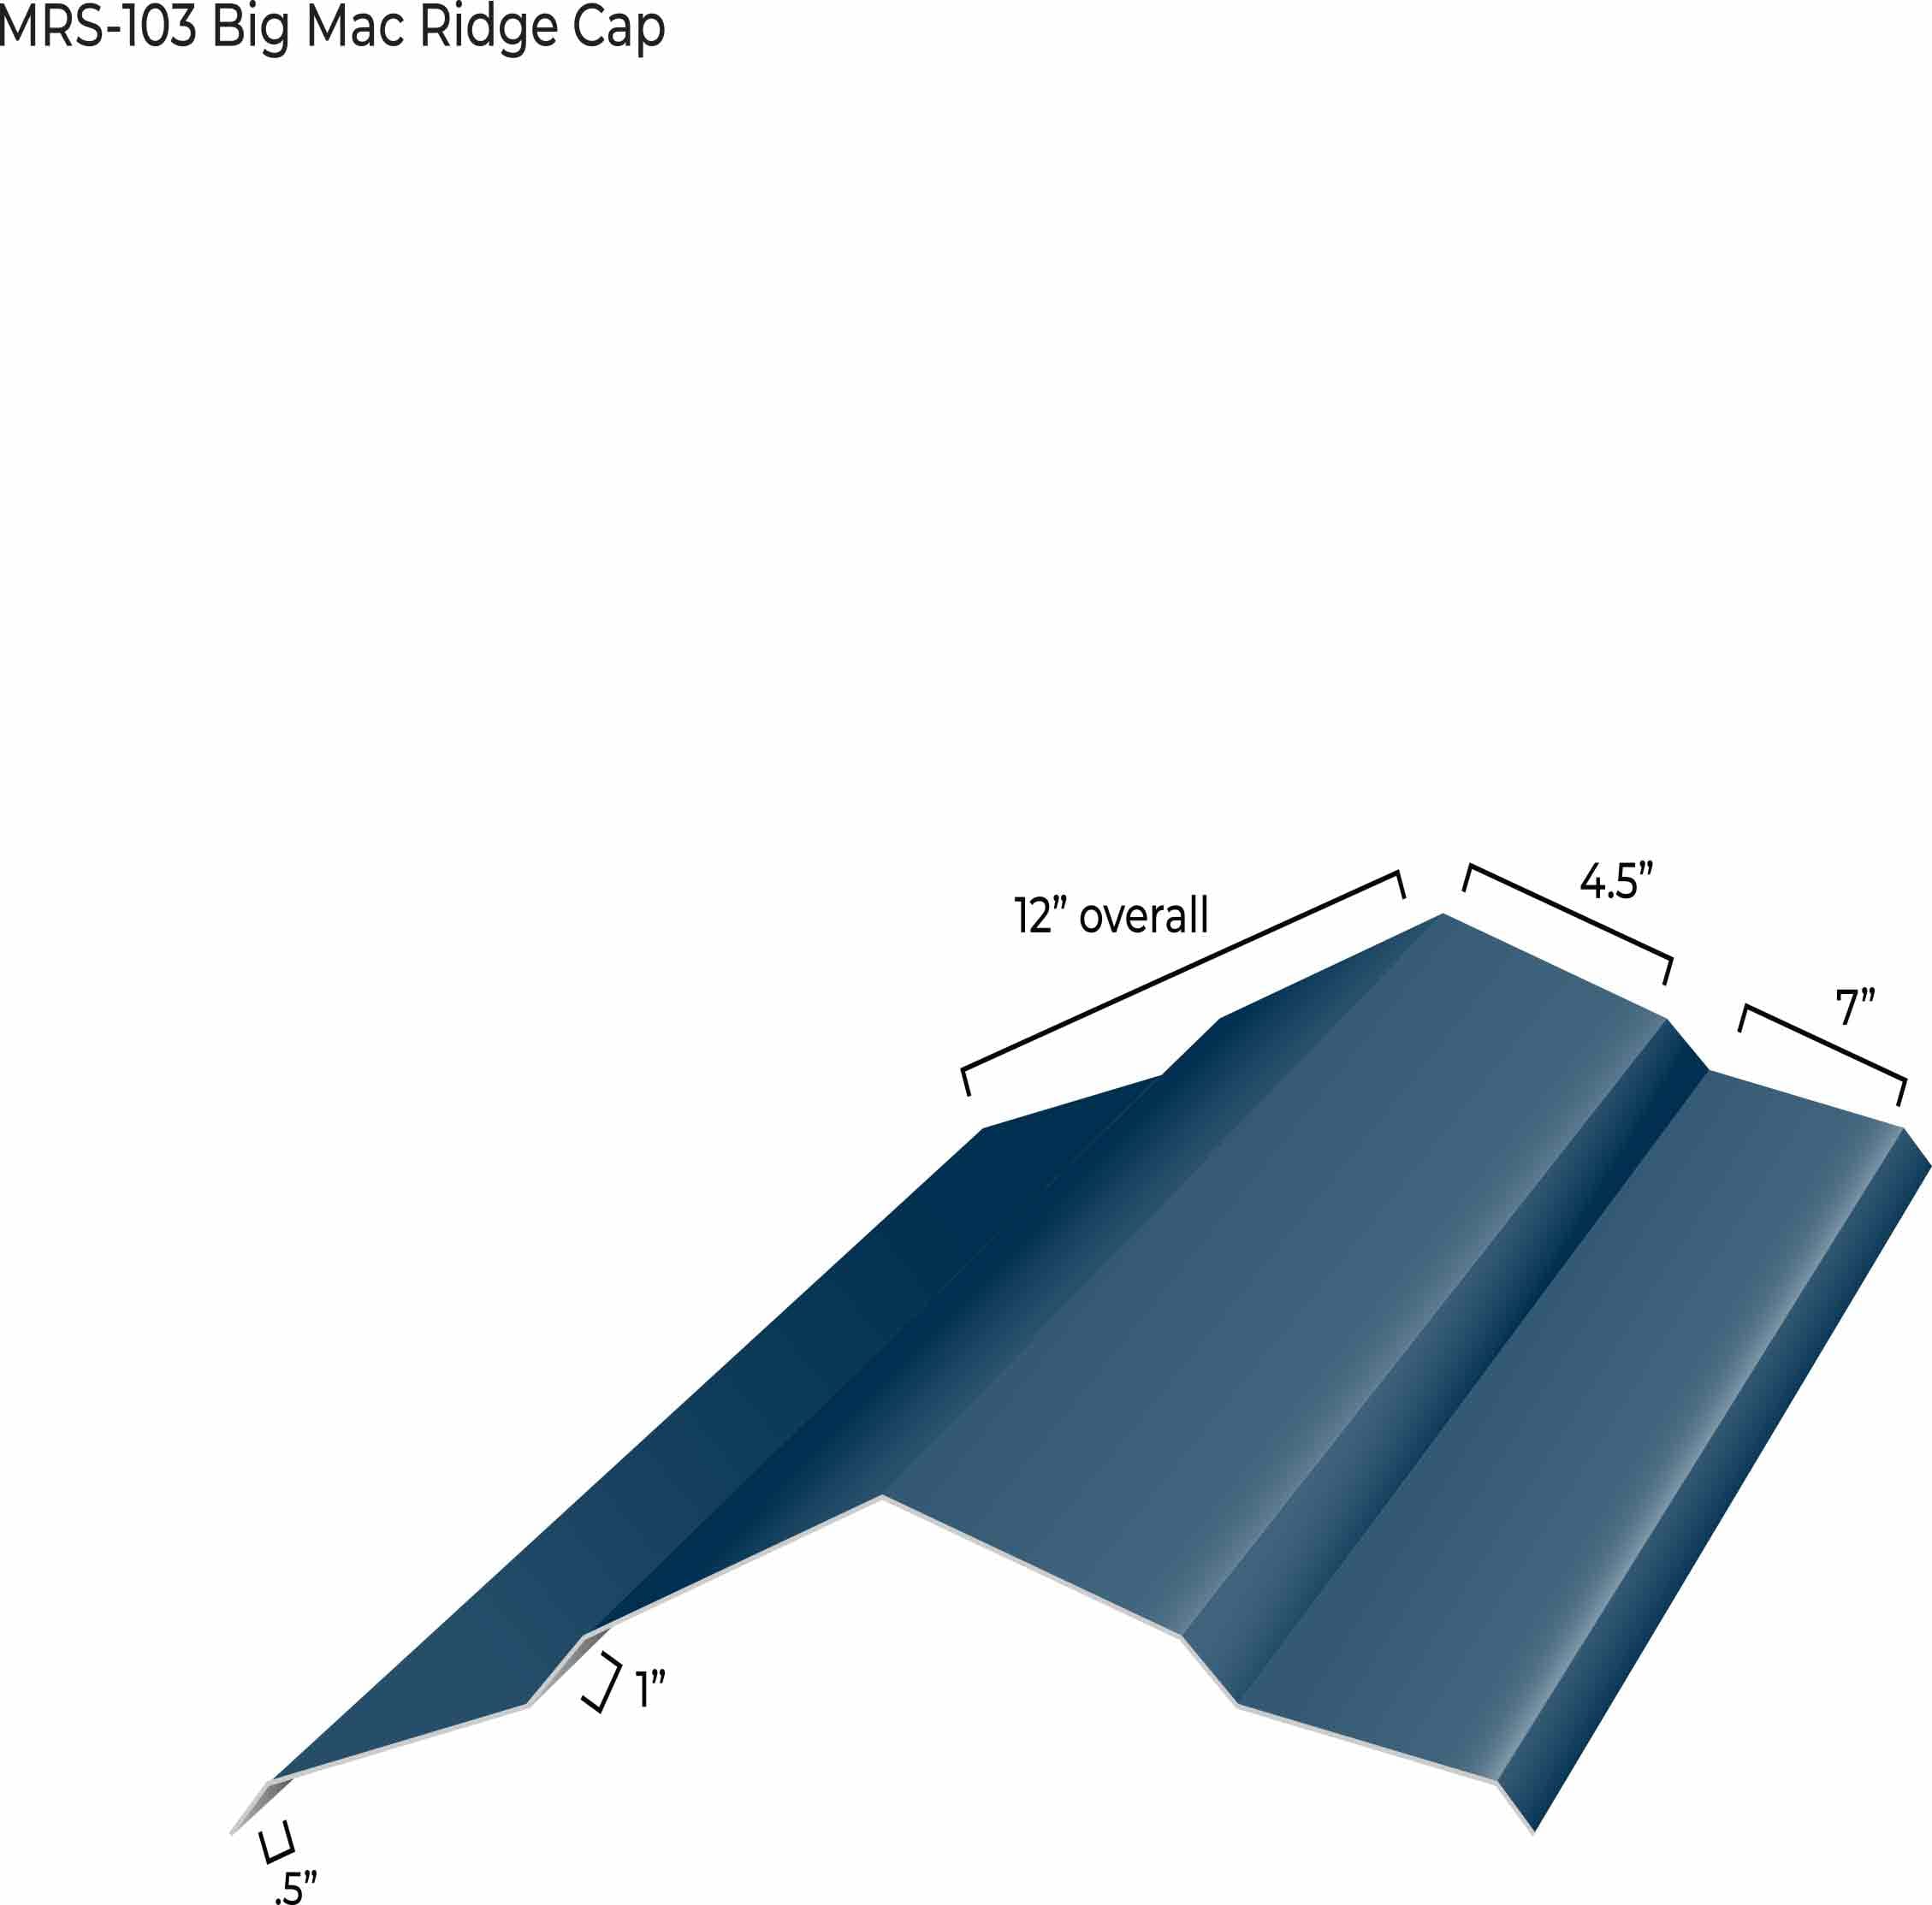 MRS-103 Big Mac Ridge Cap